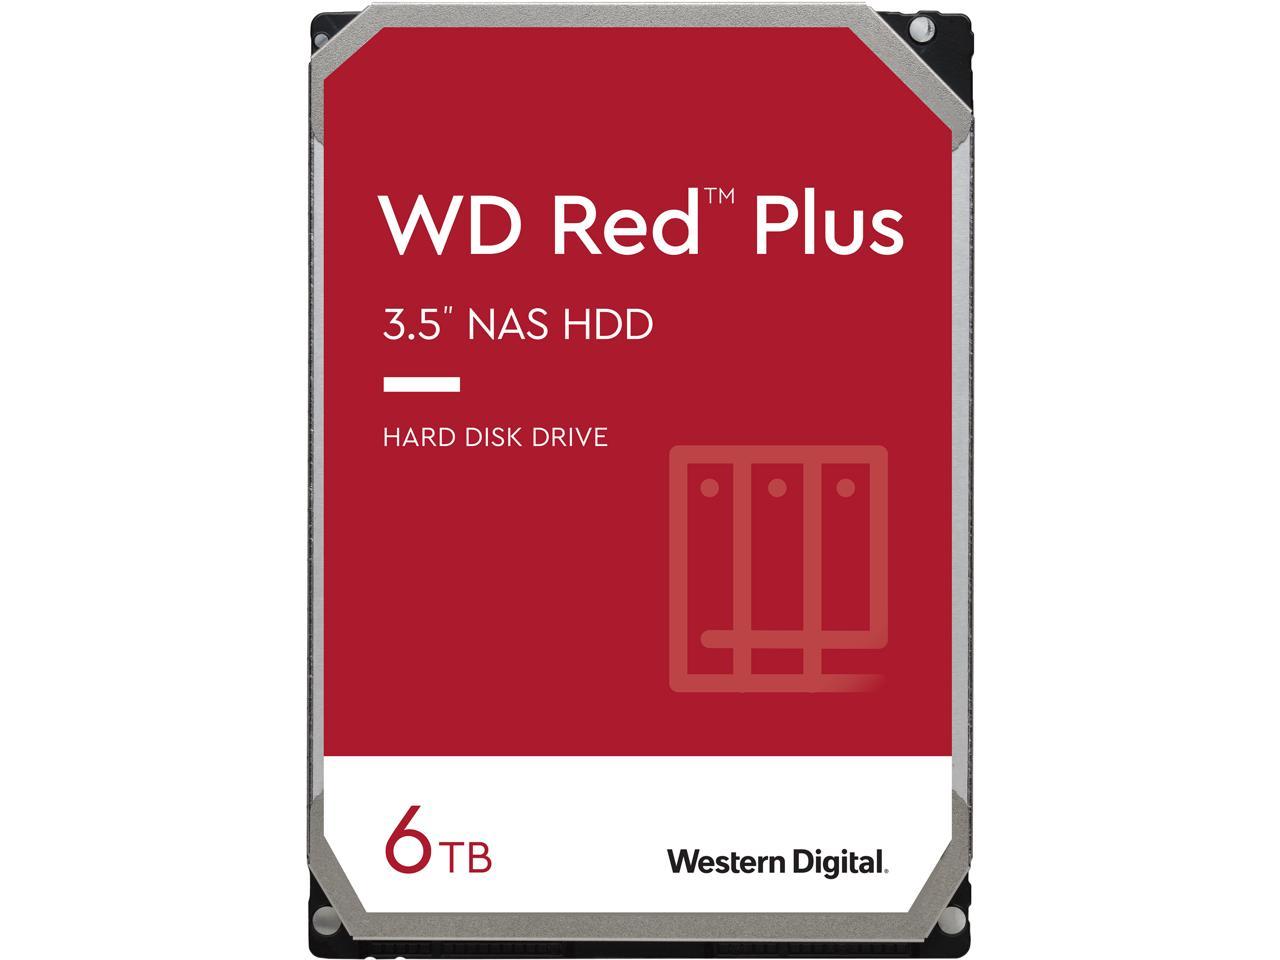 6TB WD Red Plus NAS Hard drive @Newegg $115